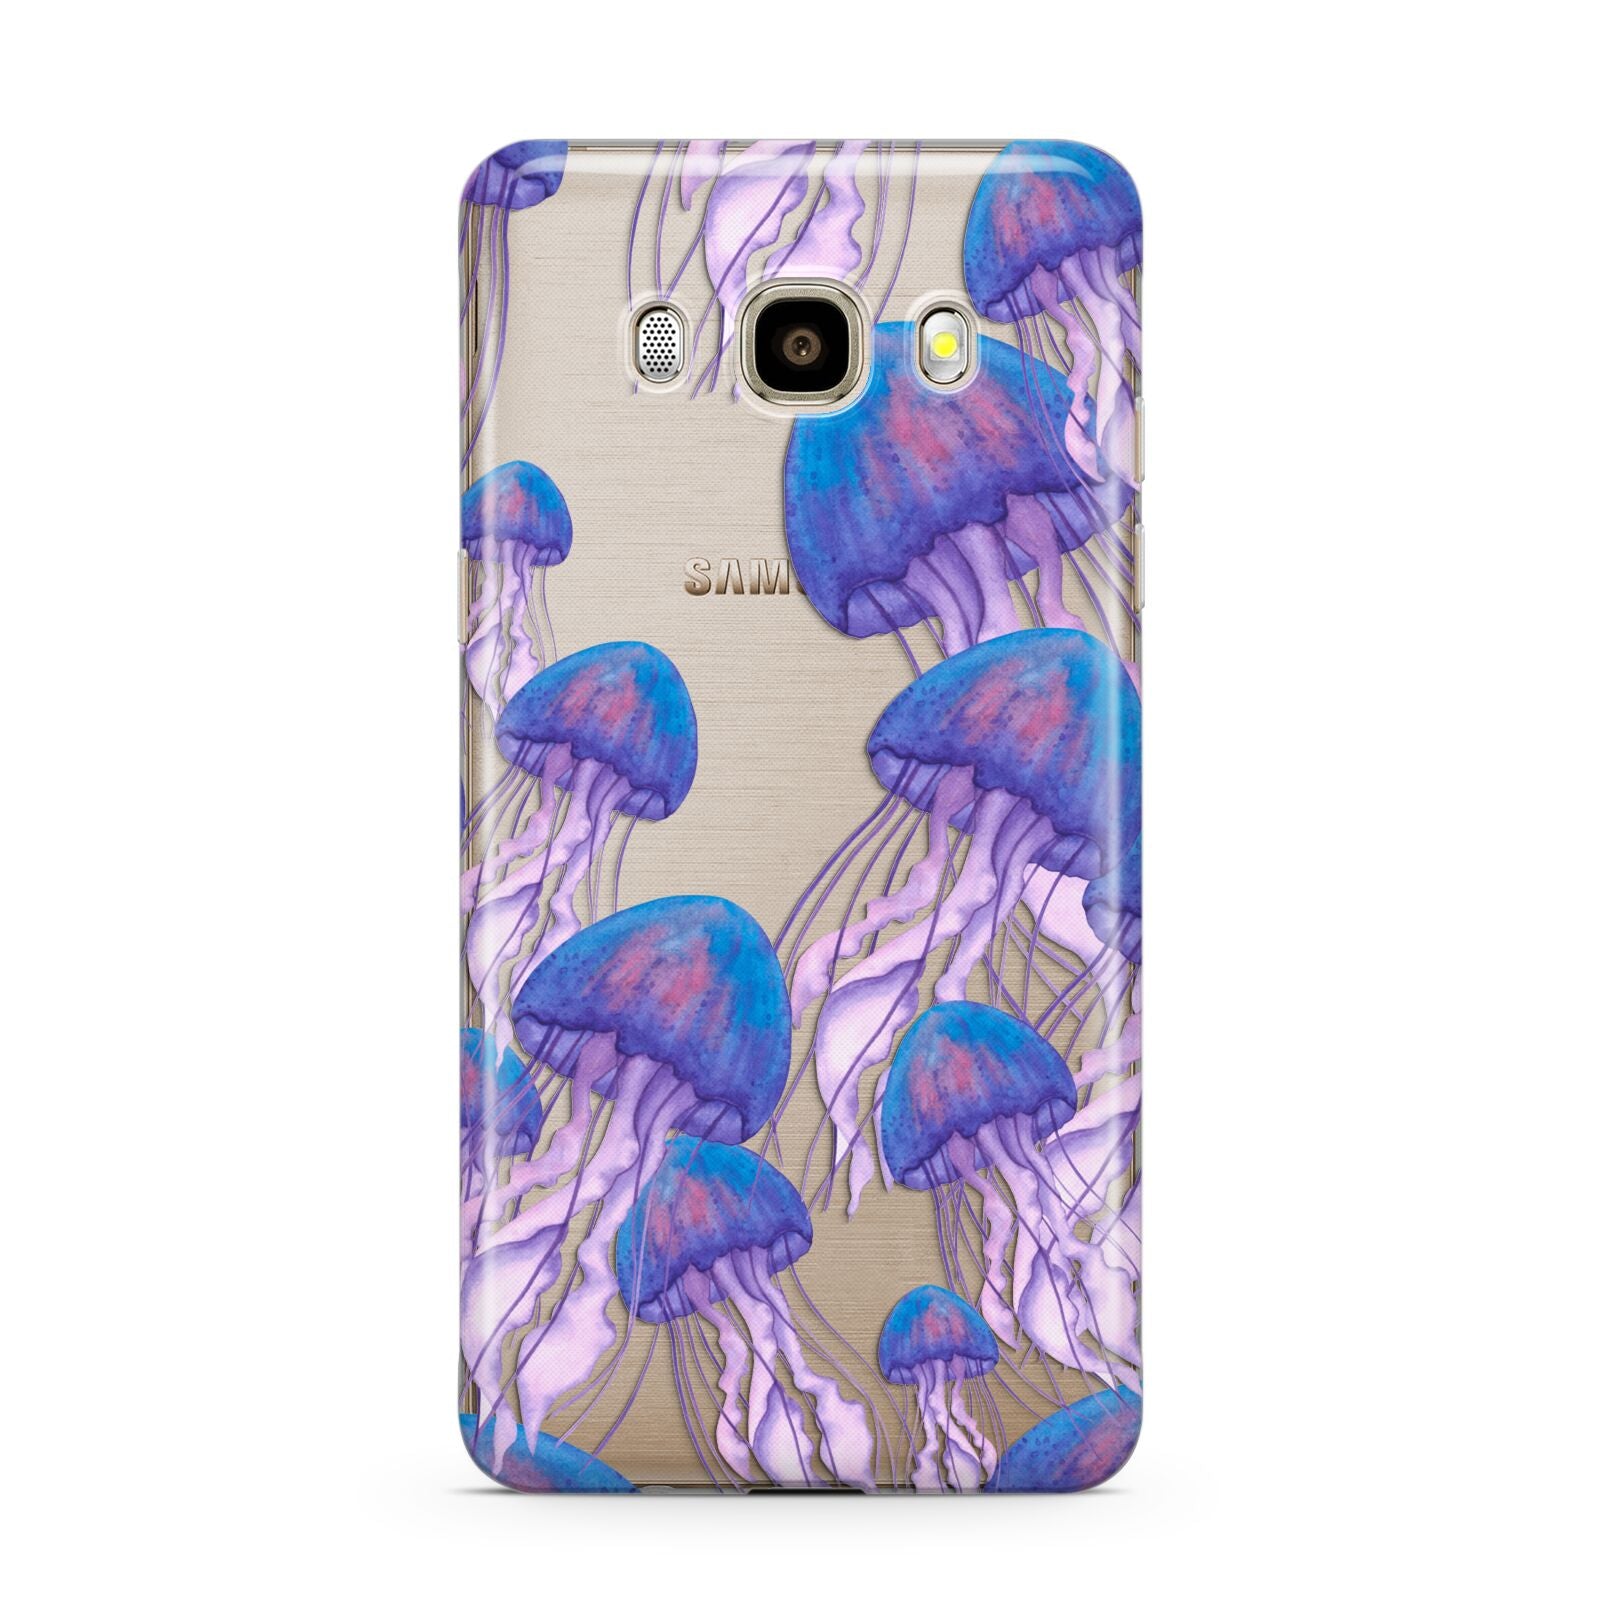 Jellyfish Samsung Galaxy J7 2016 Case on gold phone